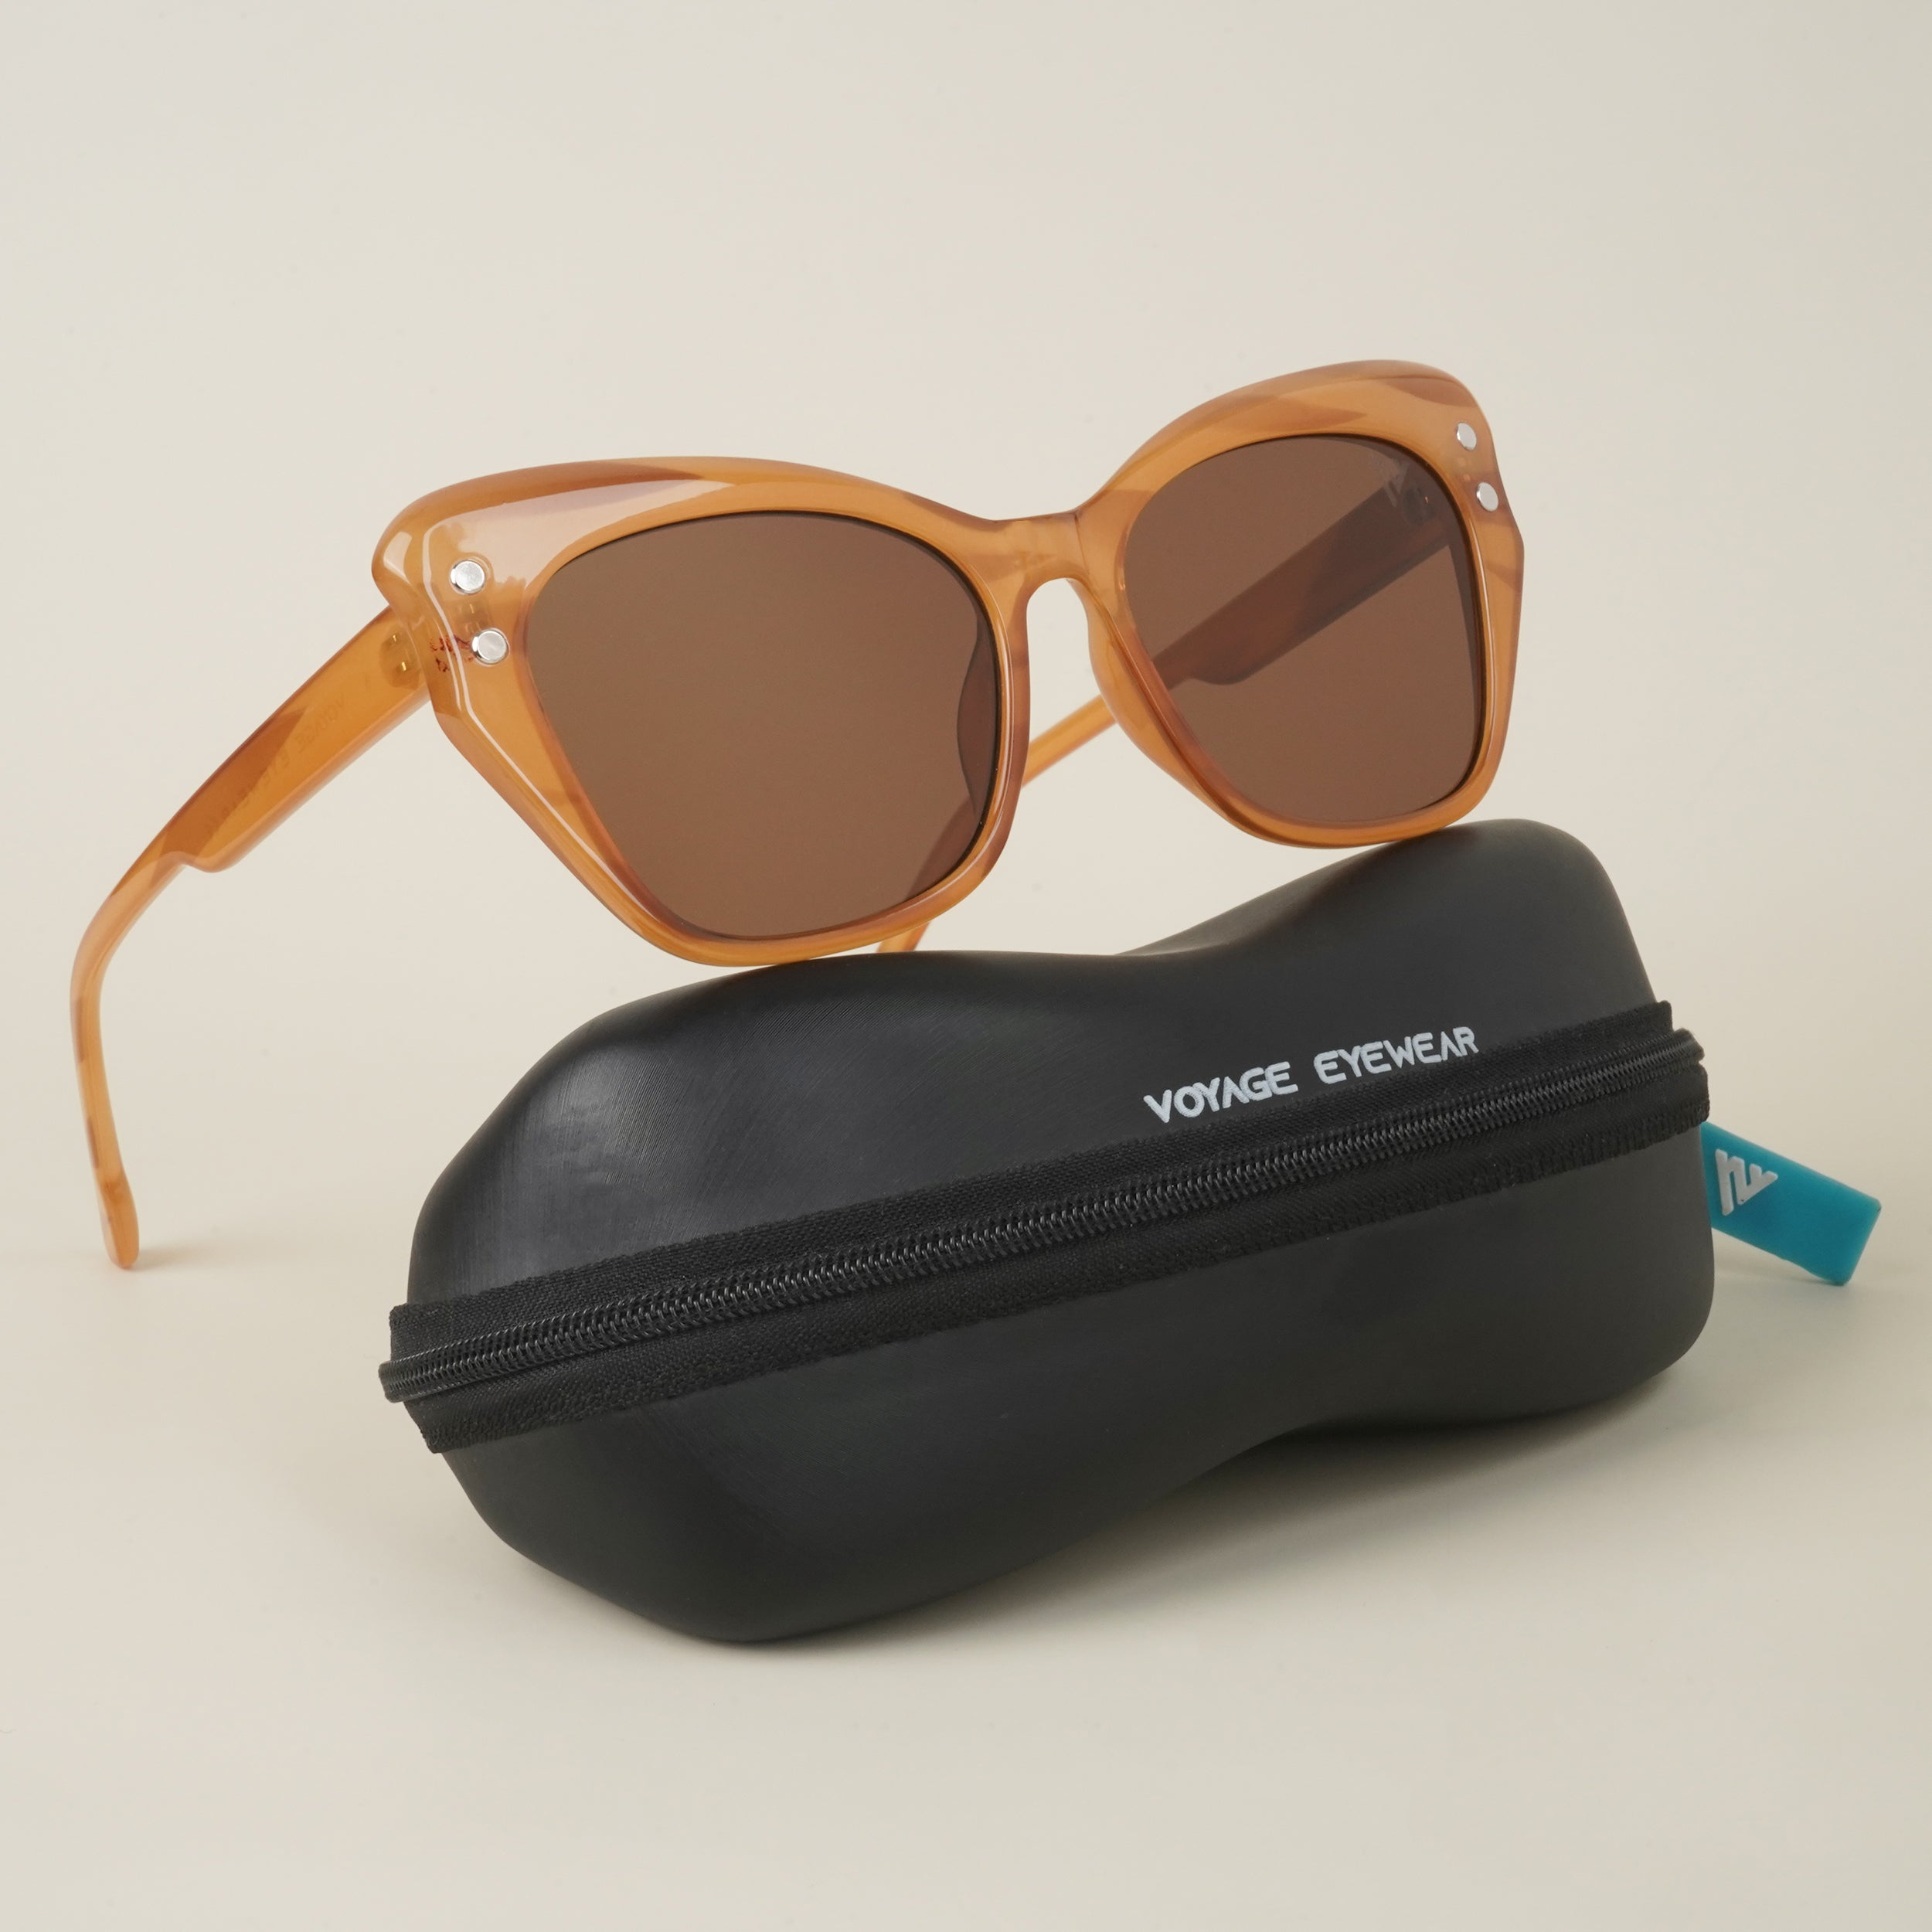 Voyage Light Brown Cateye Sunglasses for Women - MG4109